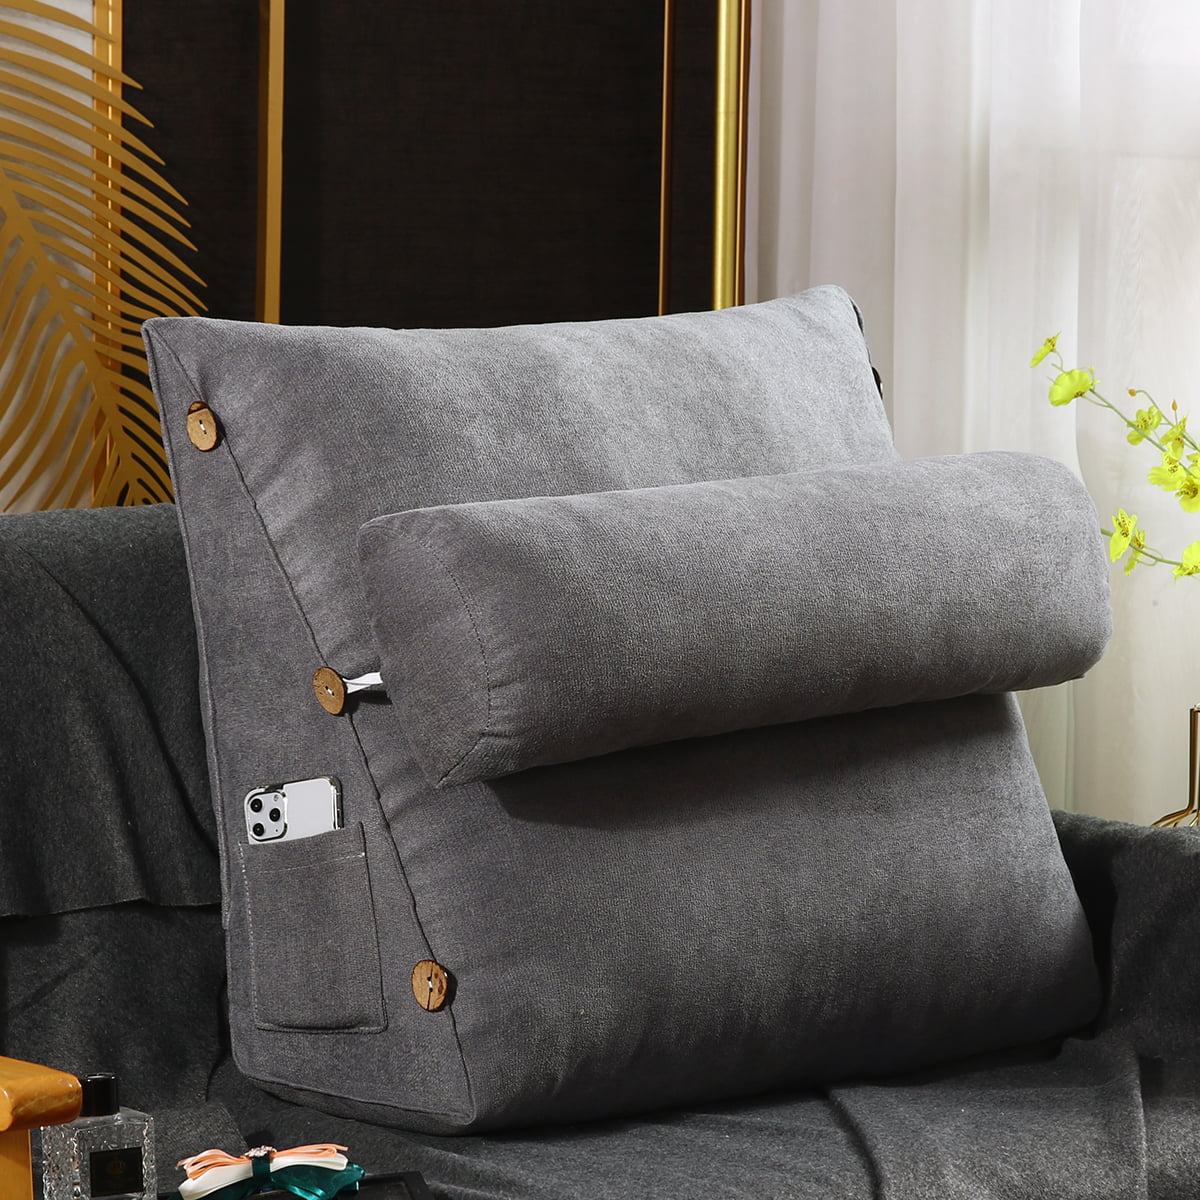 Adjustable Wedge Back Pillow Rest Sleep Neck Home Sofa Bed Lumbar Office Cushion 